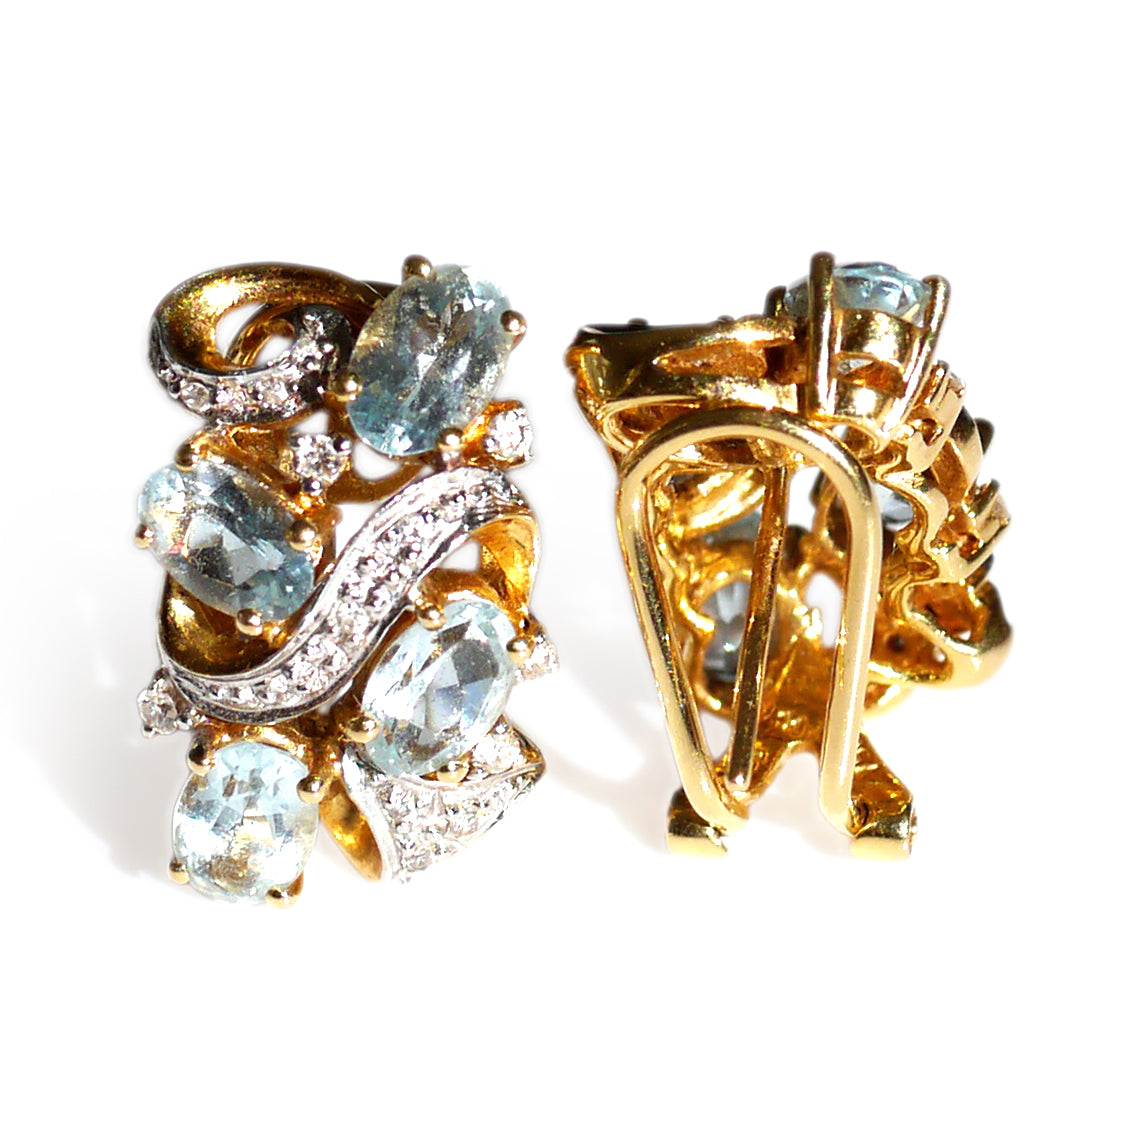 Astounding Aquamarine and Diamond Earrings